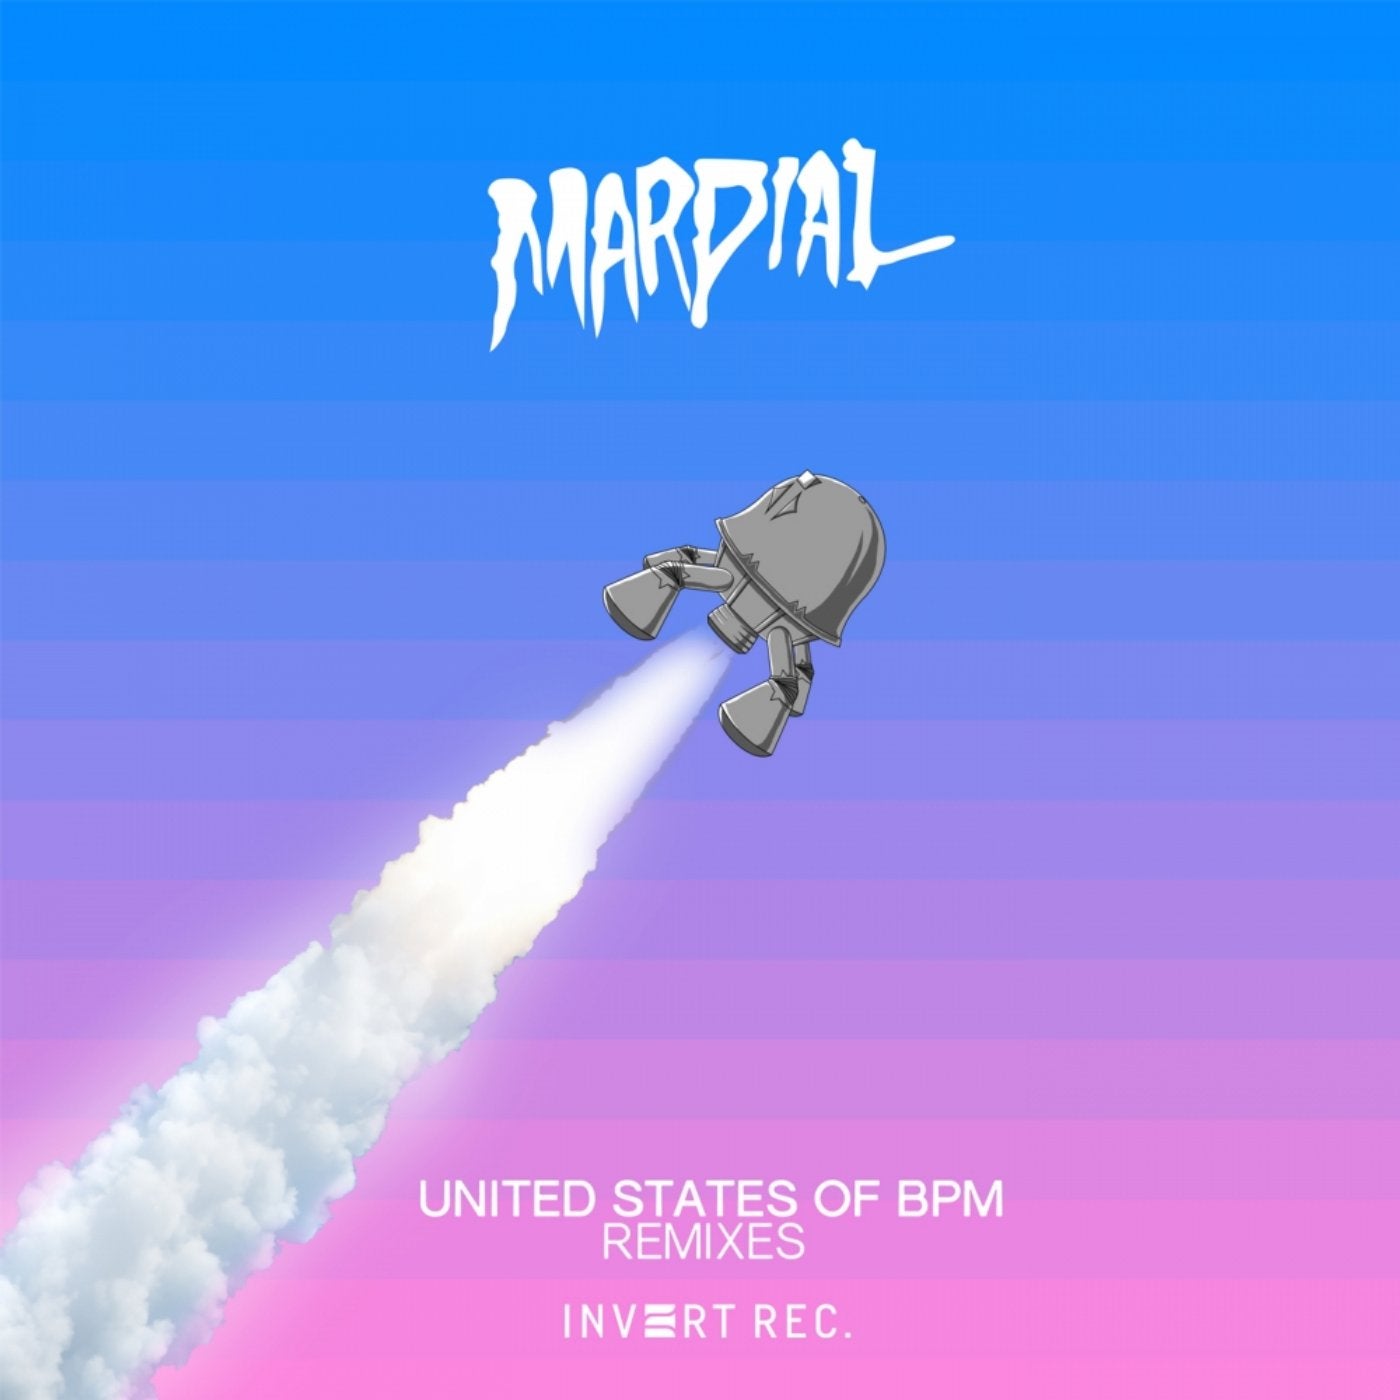 United States of BPM Remixes